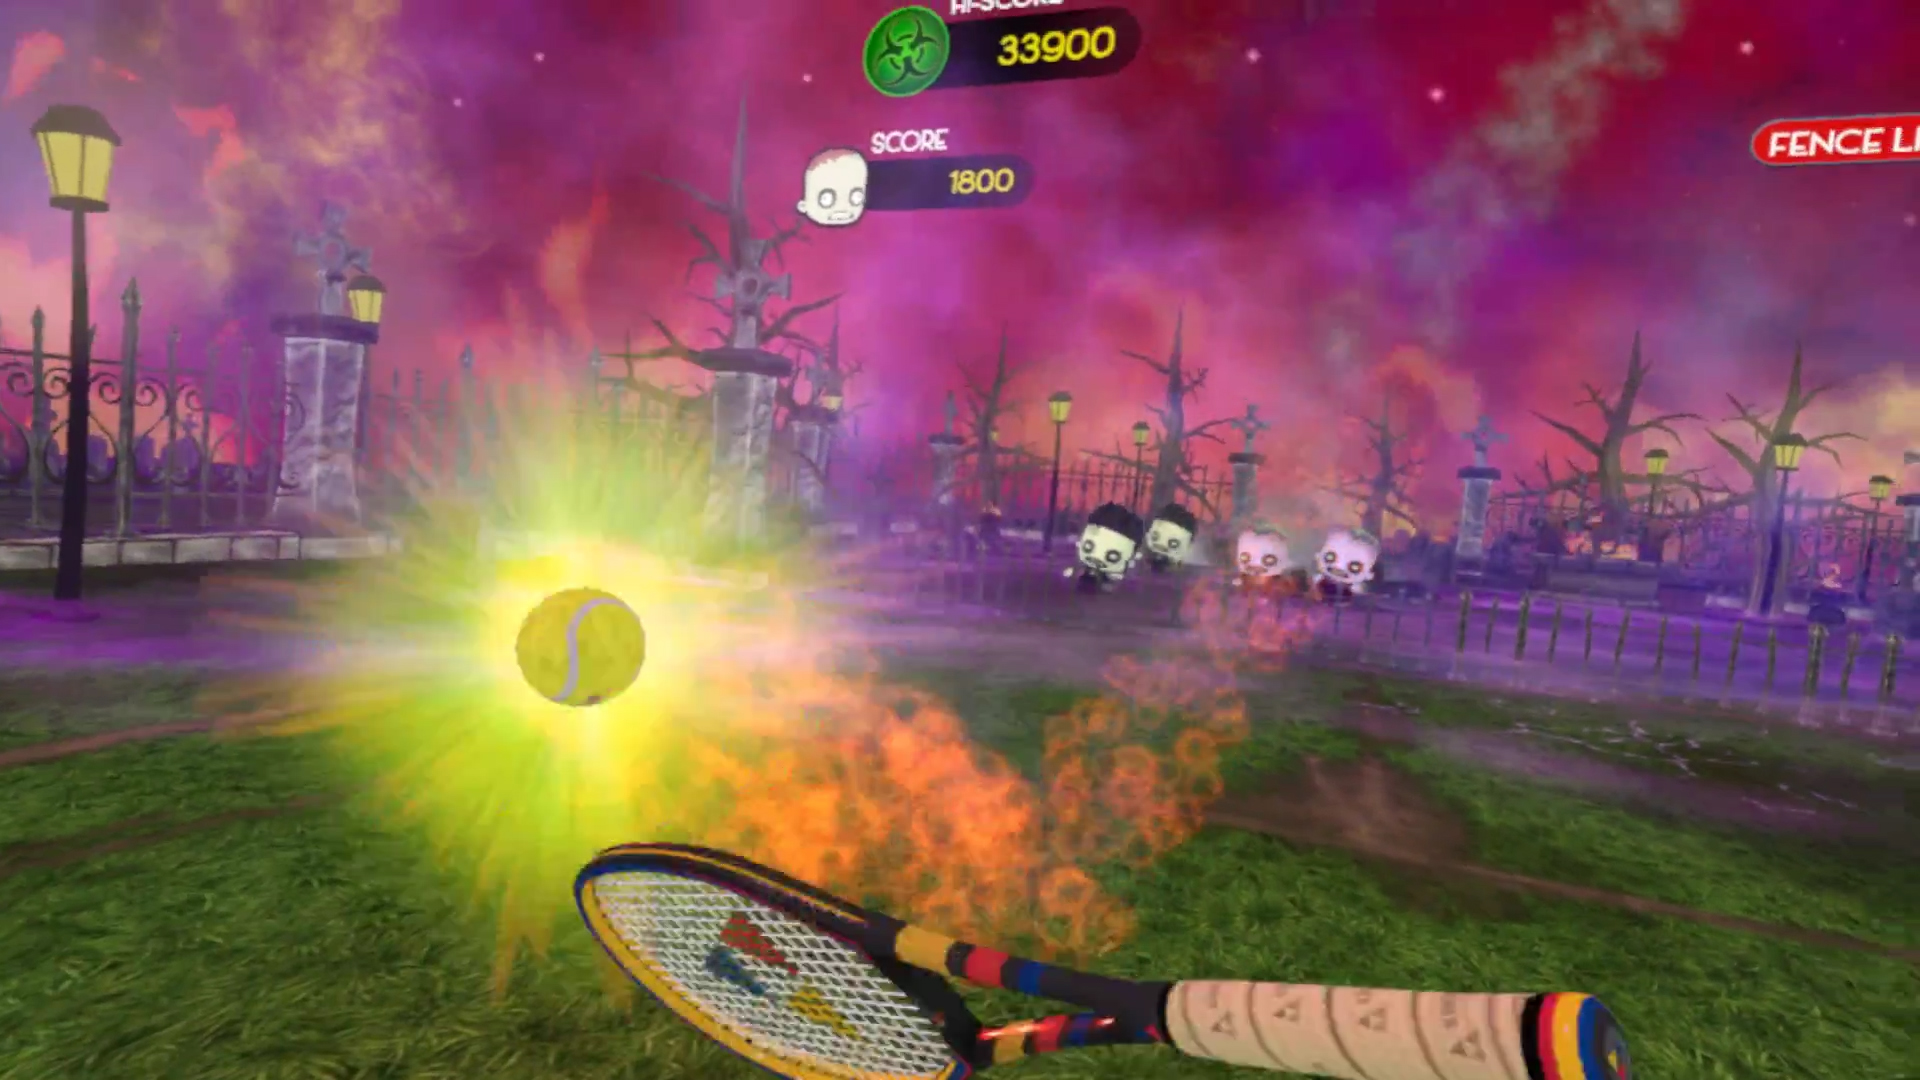 Smoots Tennis Survival Zombie Steam CD Key